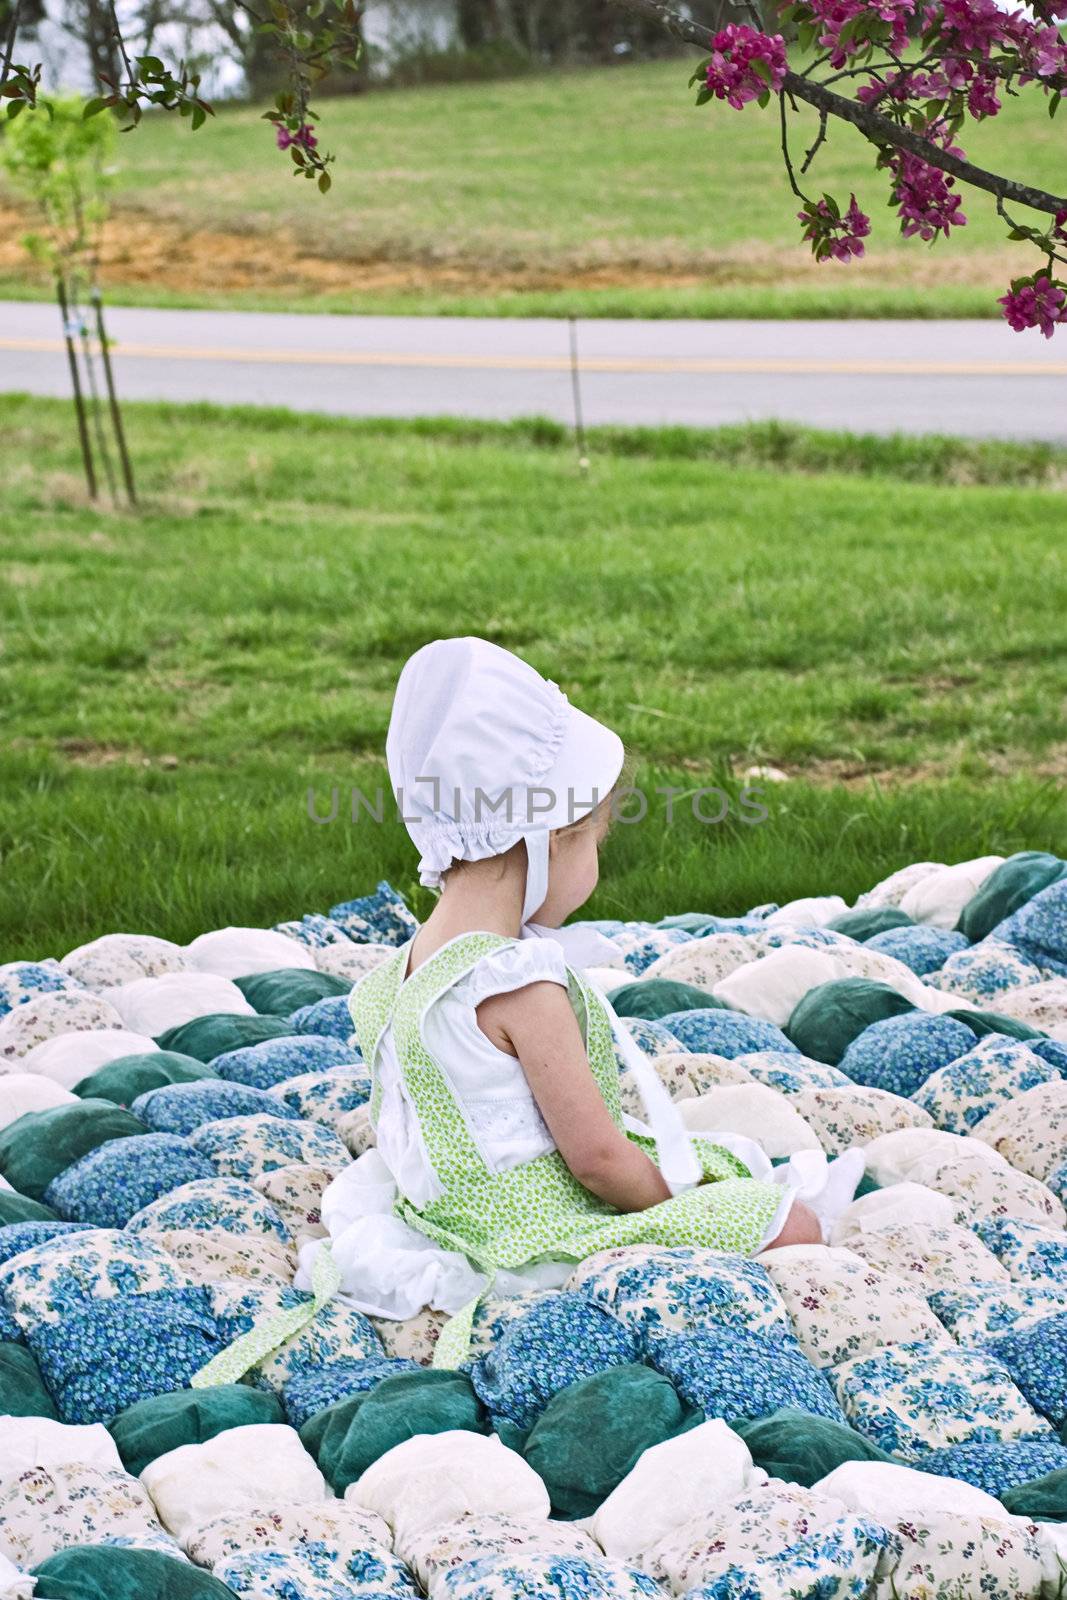 Amish child by StephanieFrey